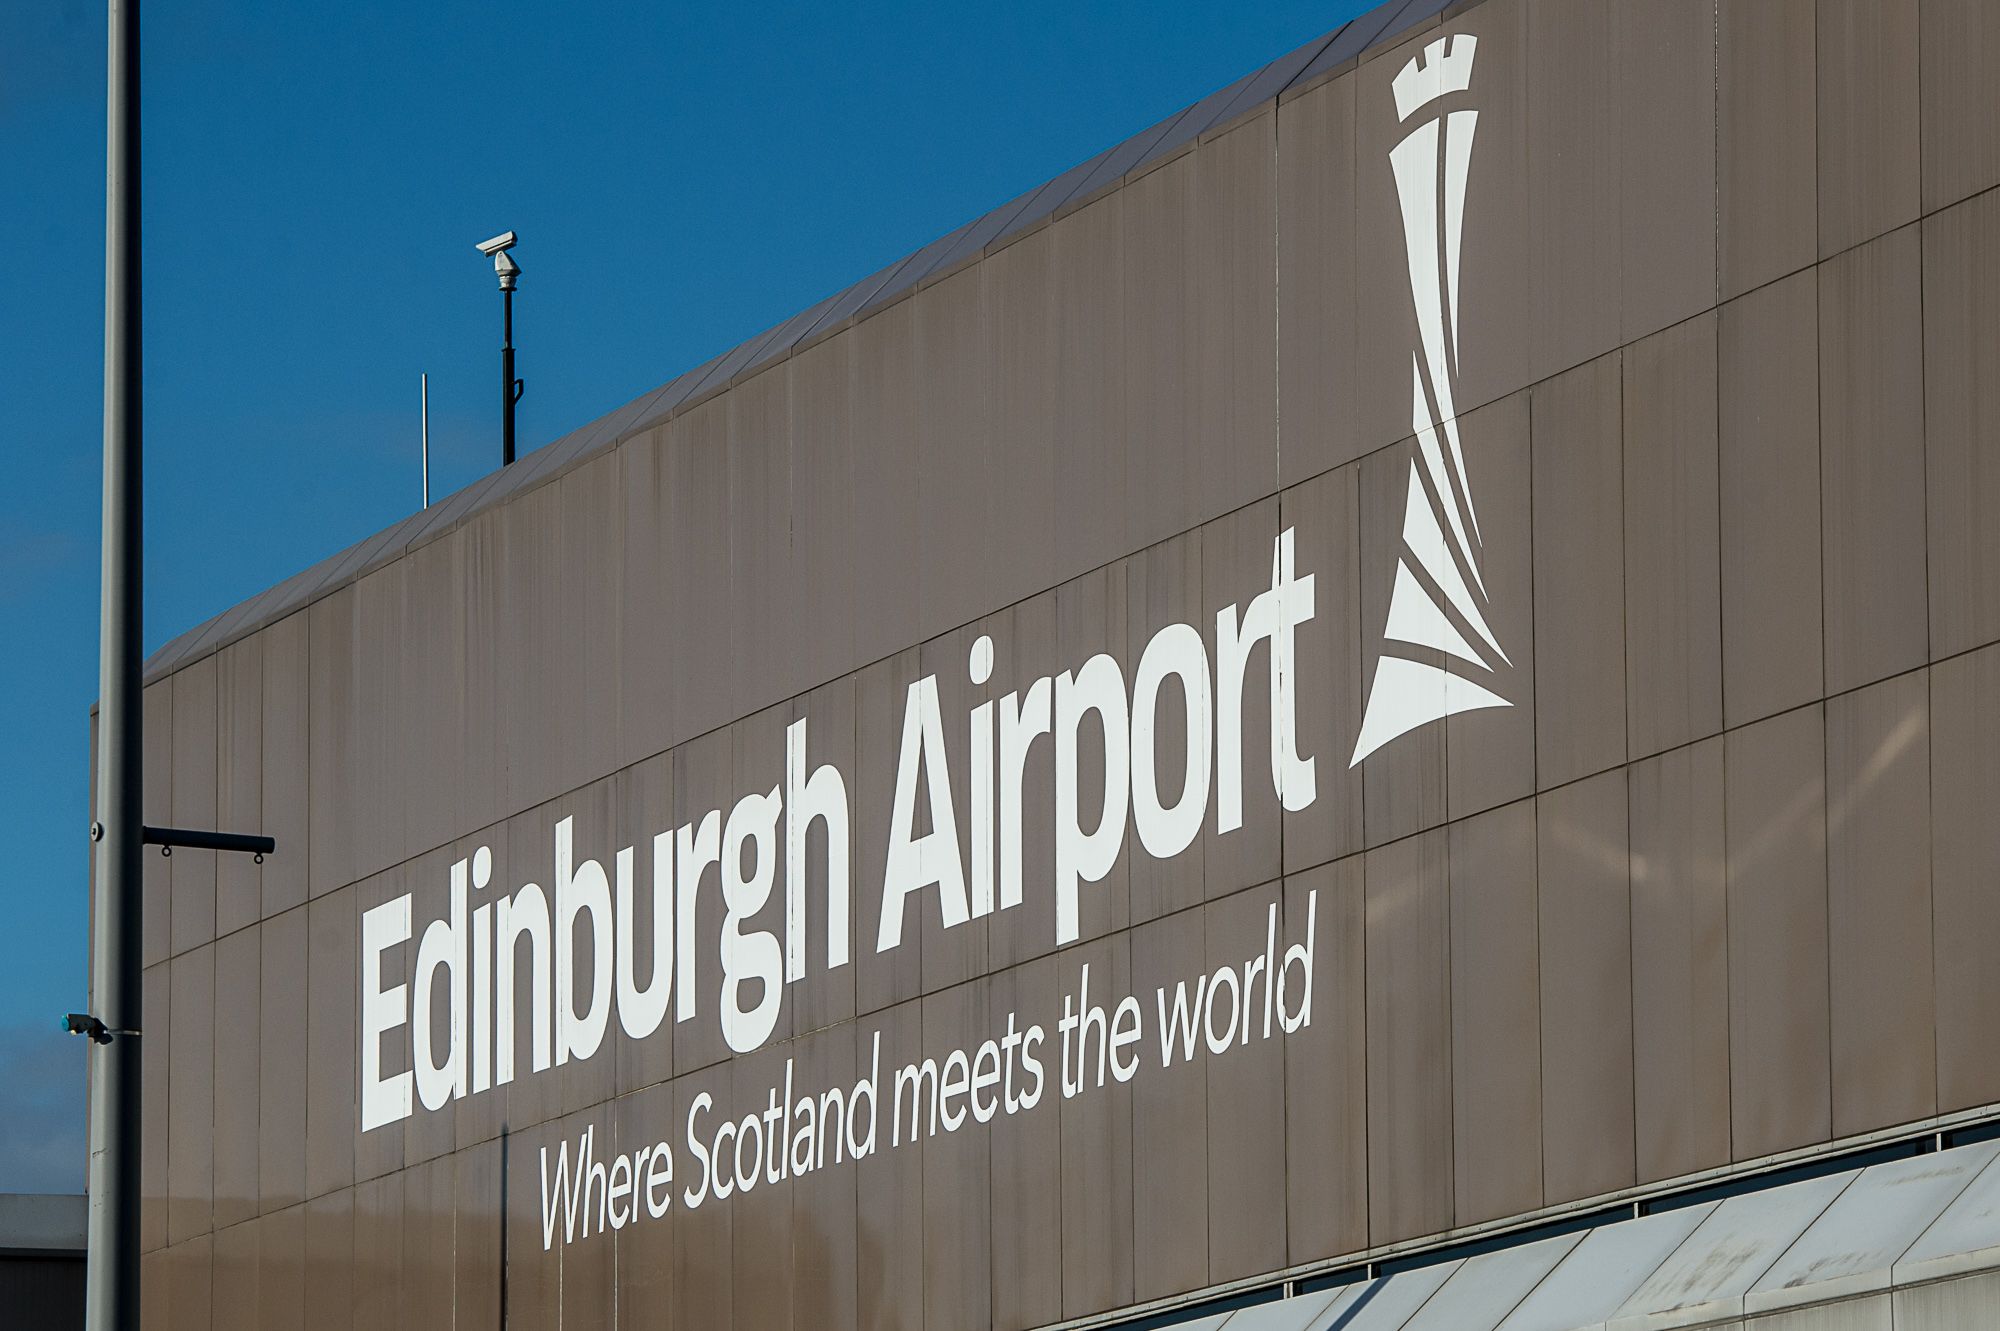 The drugs were brought in via Edinburgh Airport